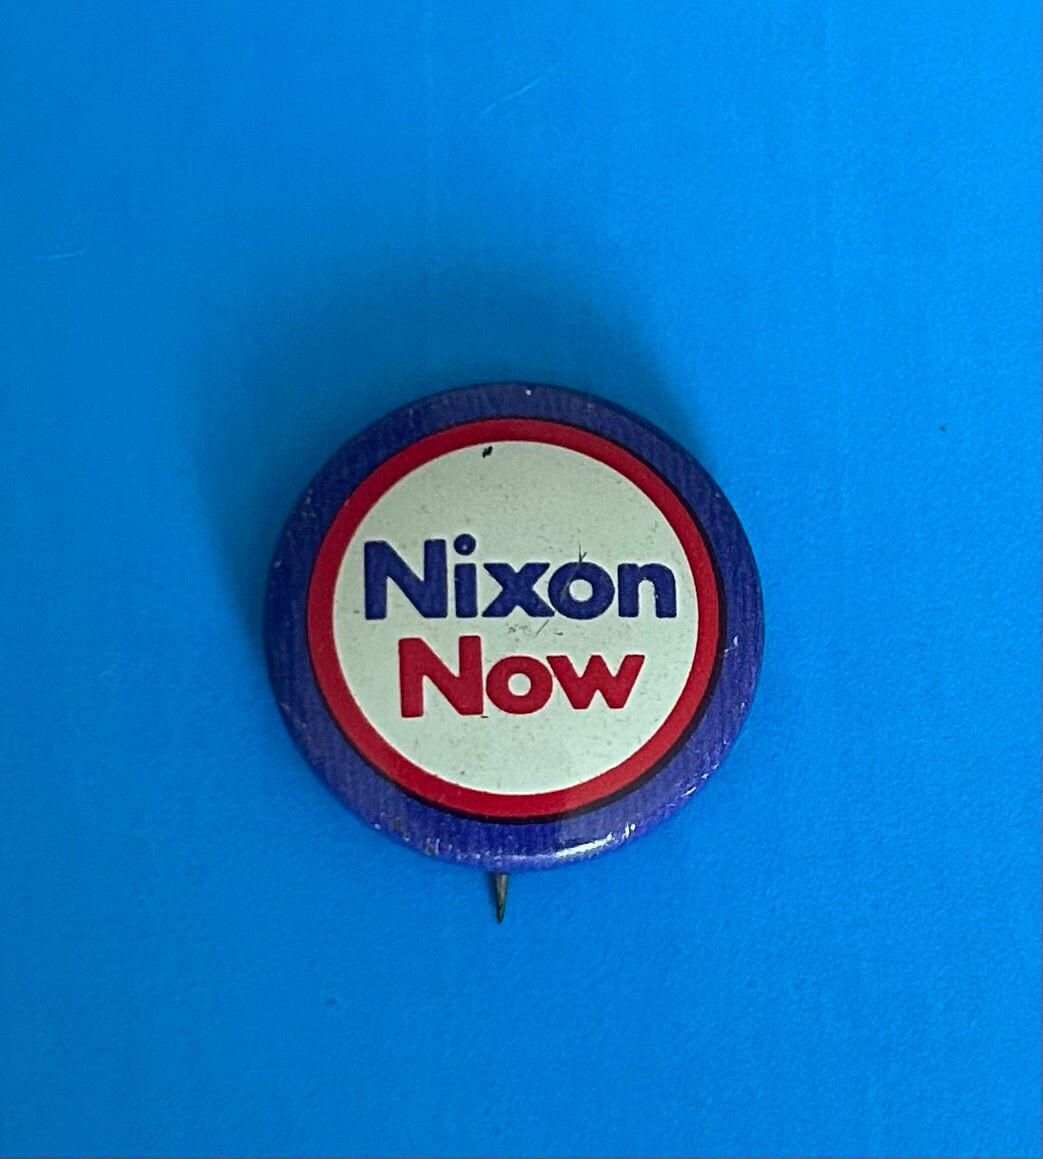 President RICHARD NIXON Vintage 1972 NIXON NOW Pinback Political Button VG COND.